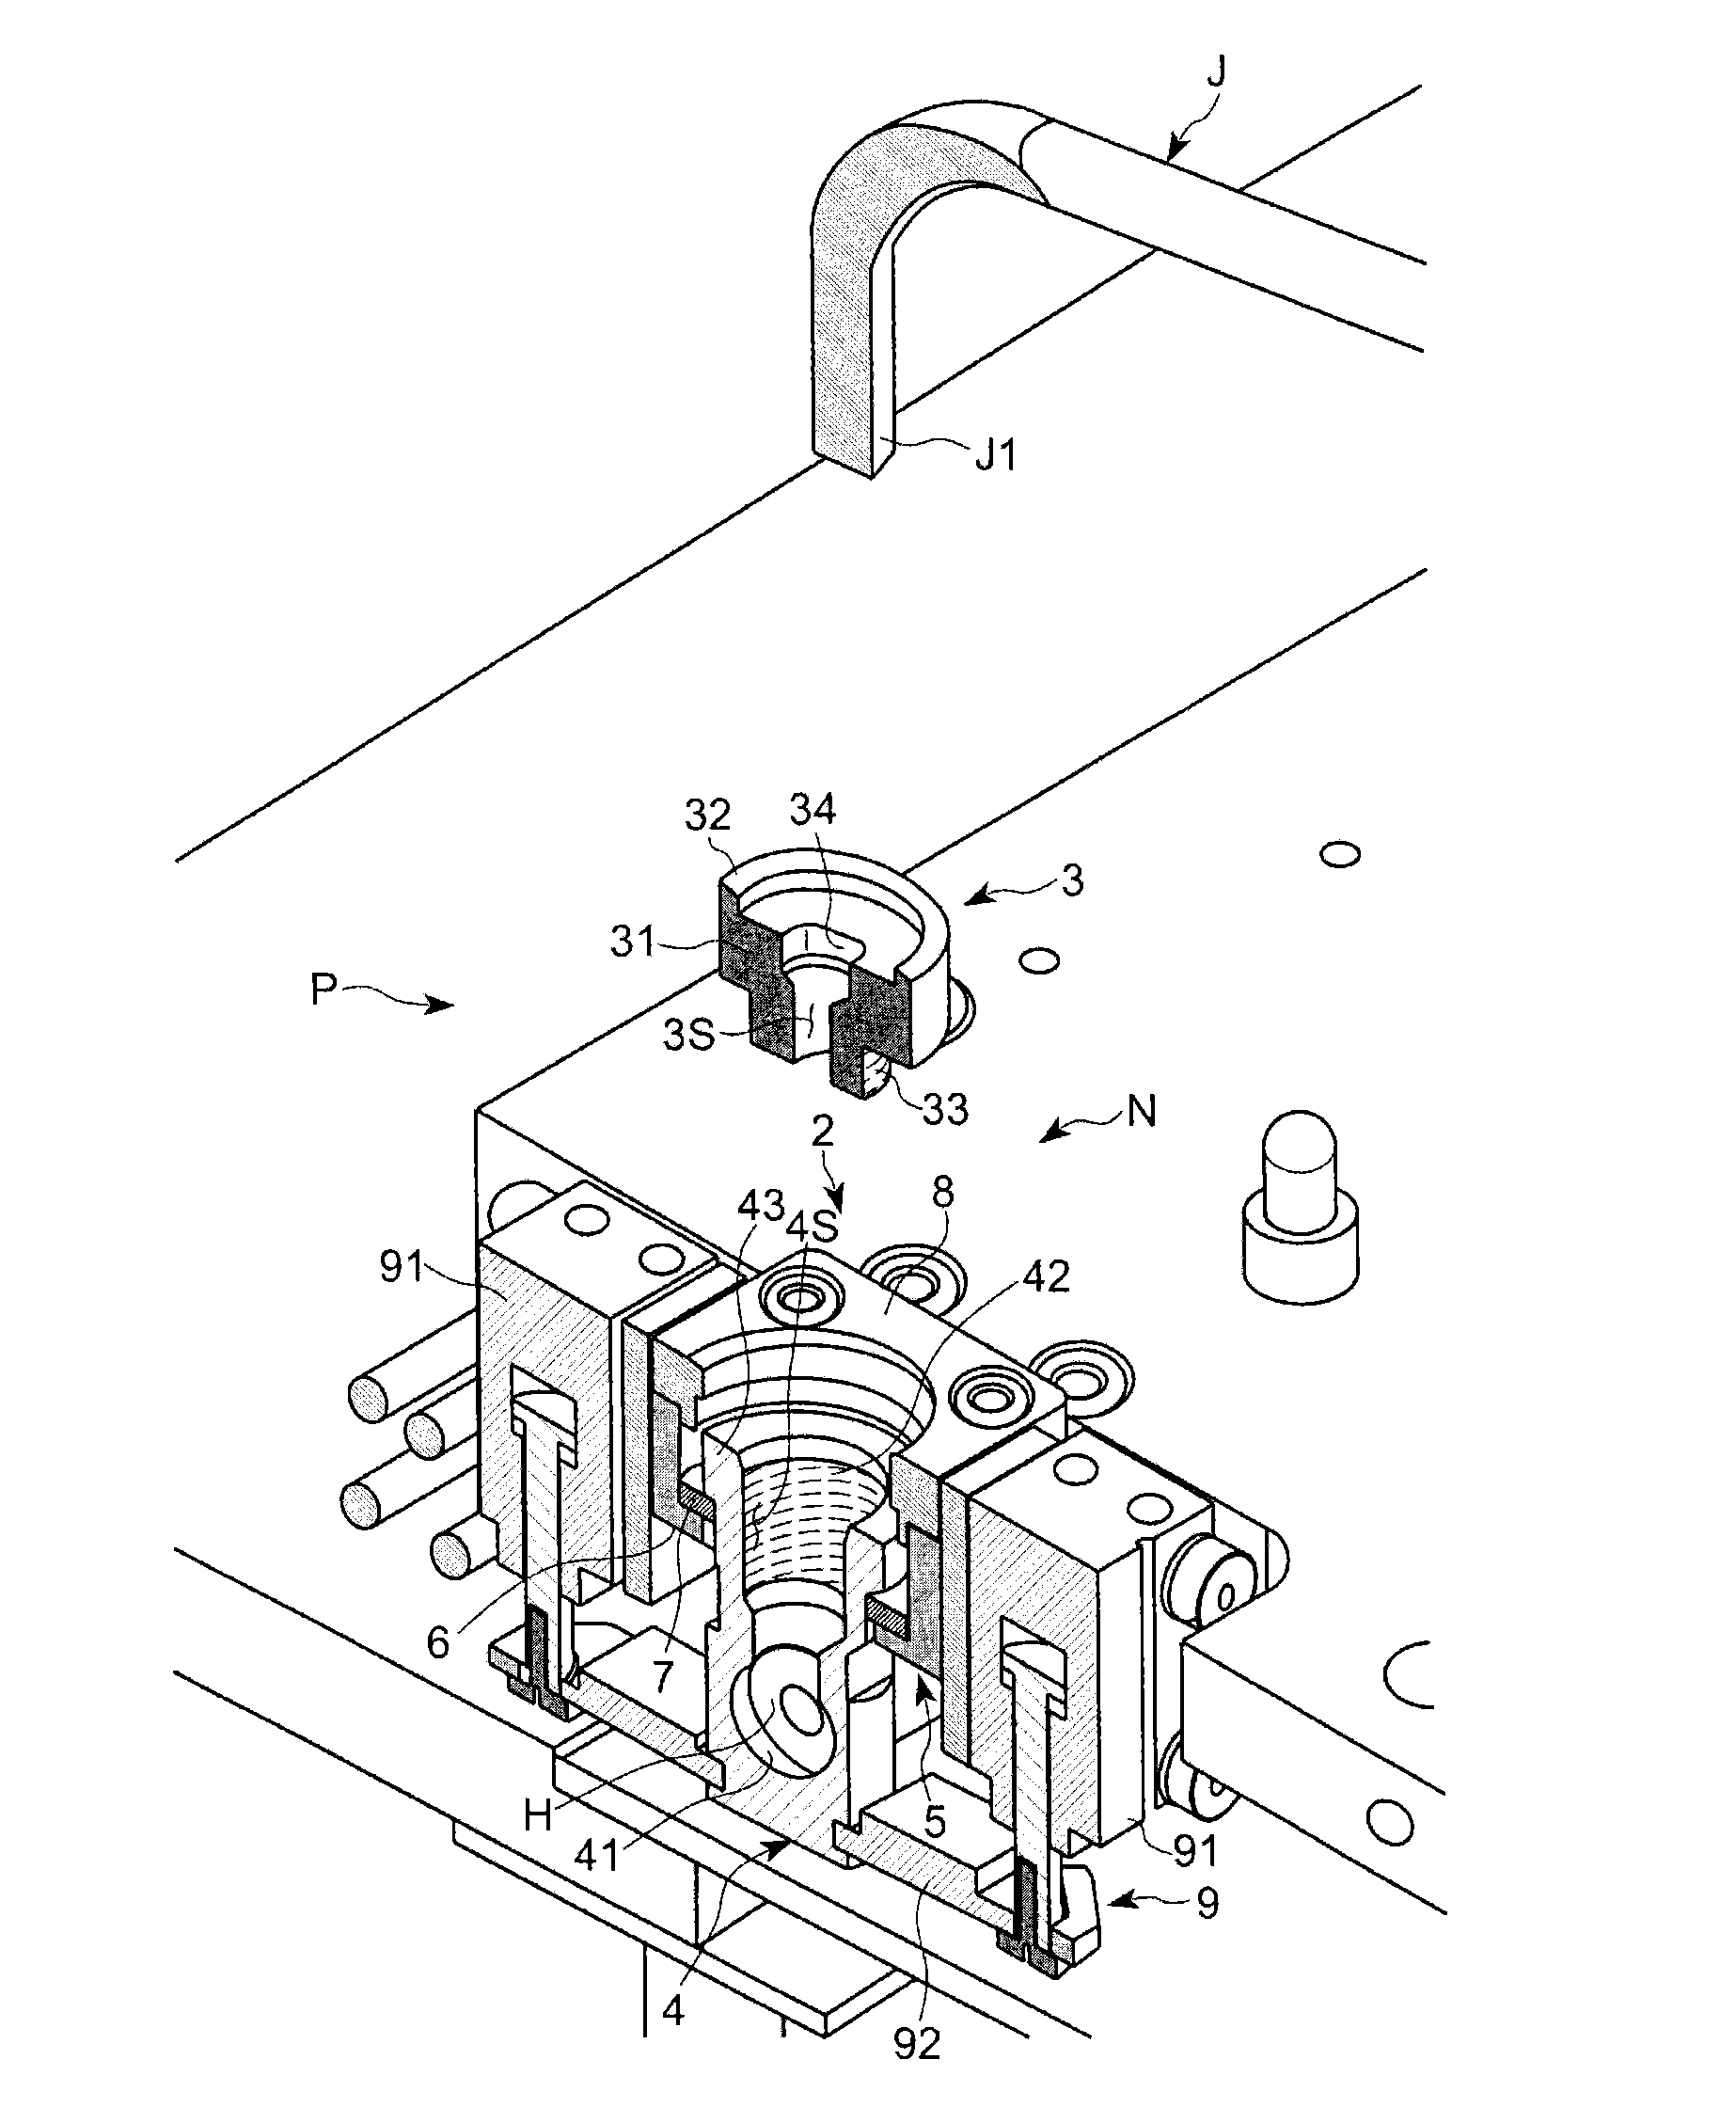 Purge apparatus and load port